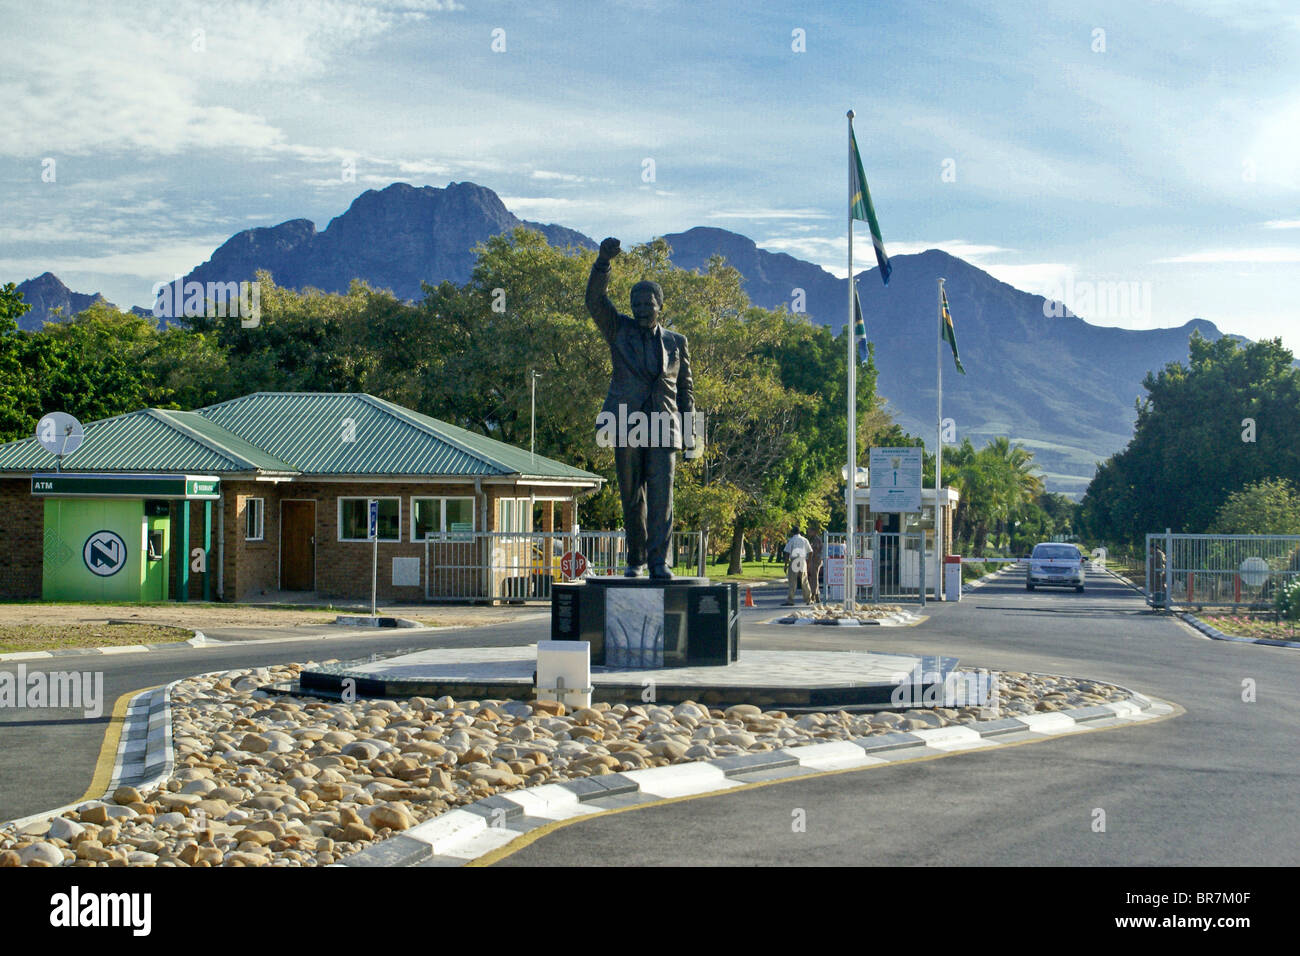 Groot Drakenstein Prison and Nelson Mandela statue, South Africa Stock Photo